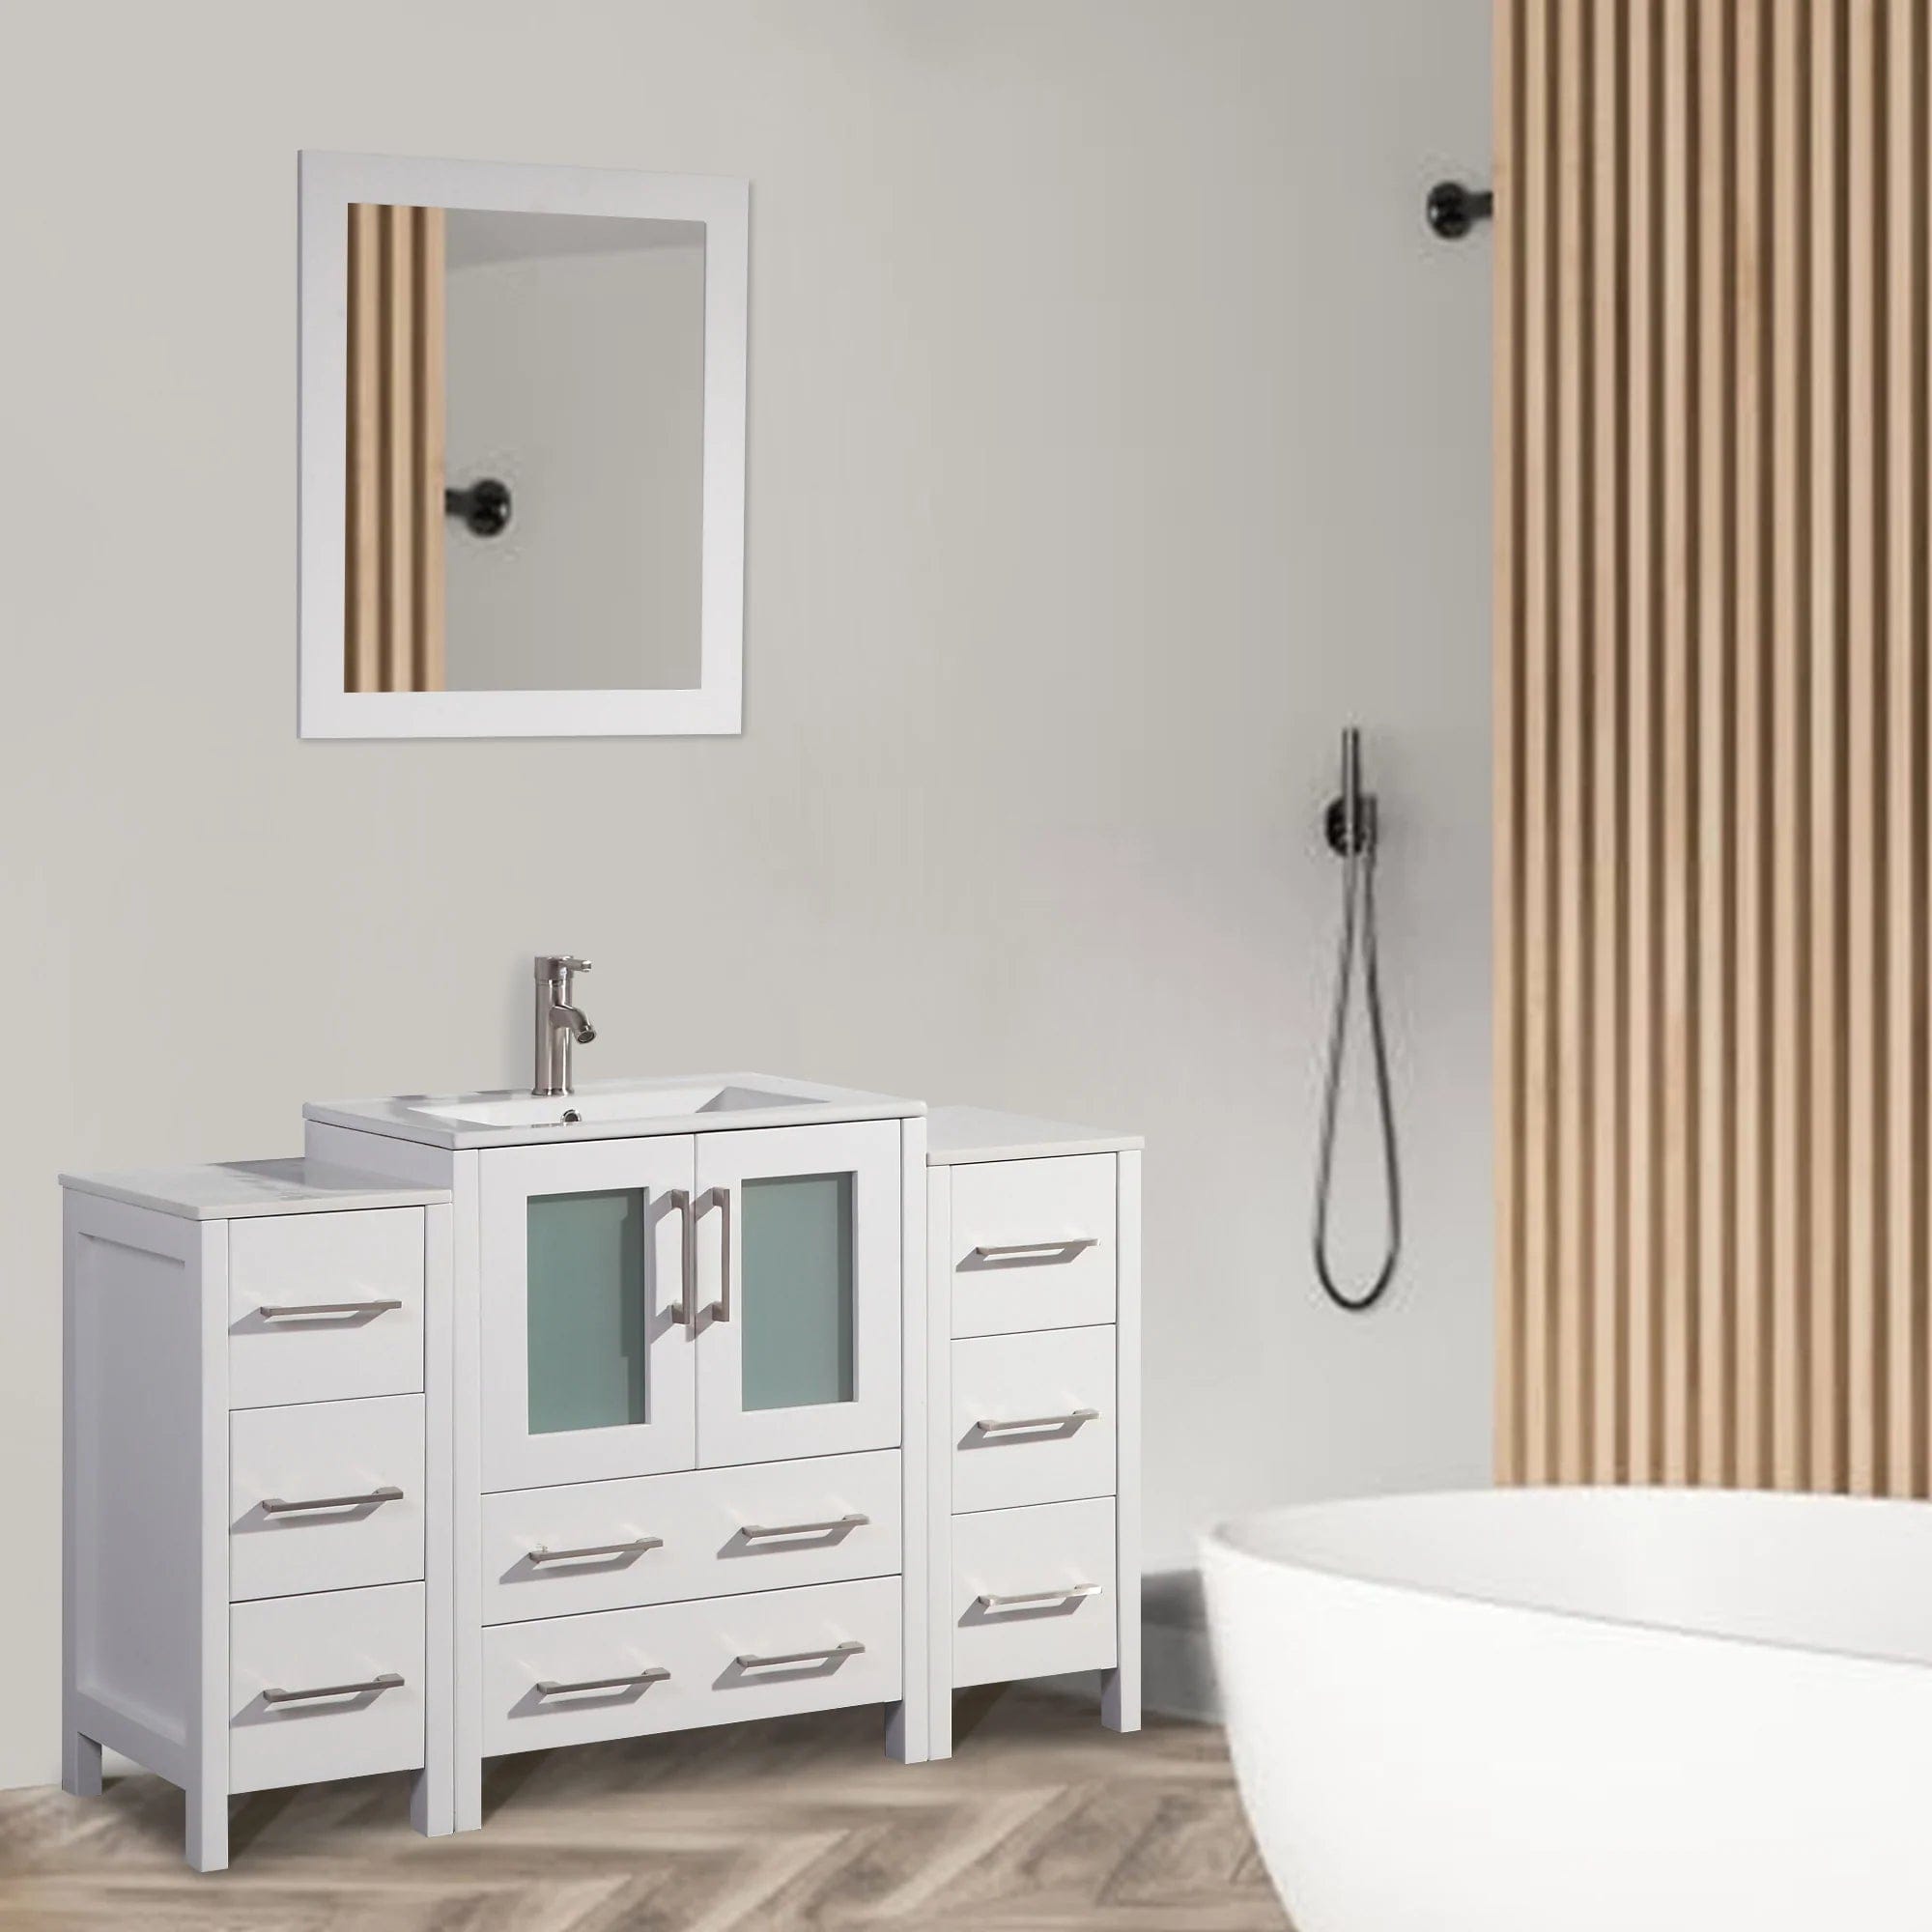 48 in. Single Sink Modern Bathroom Vanity Combo Set in White - Decohub Home